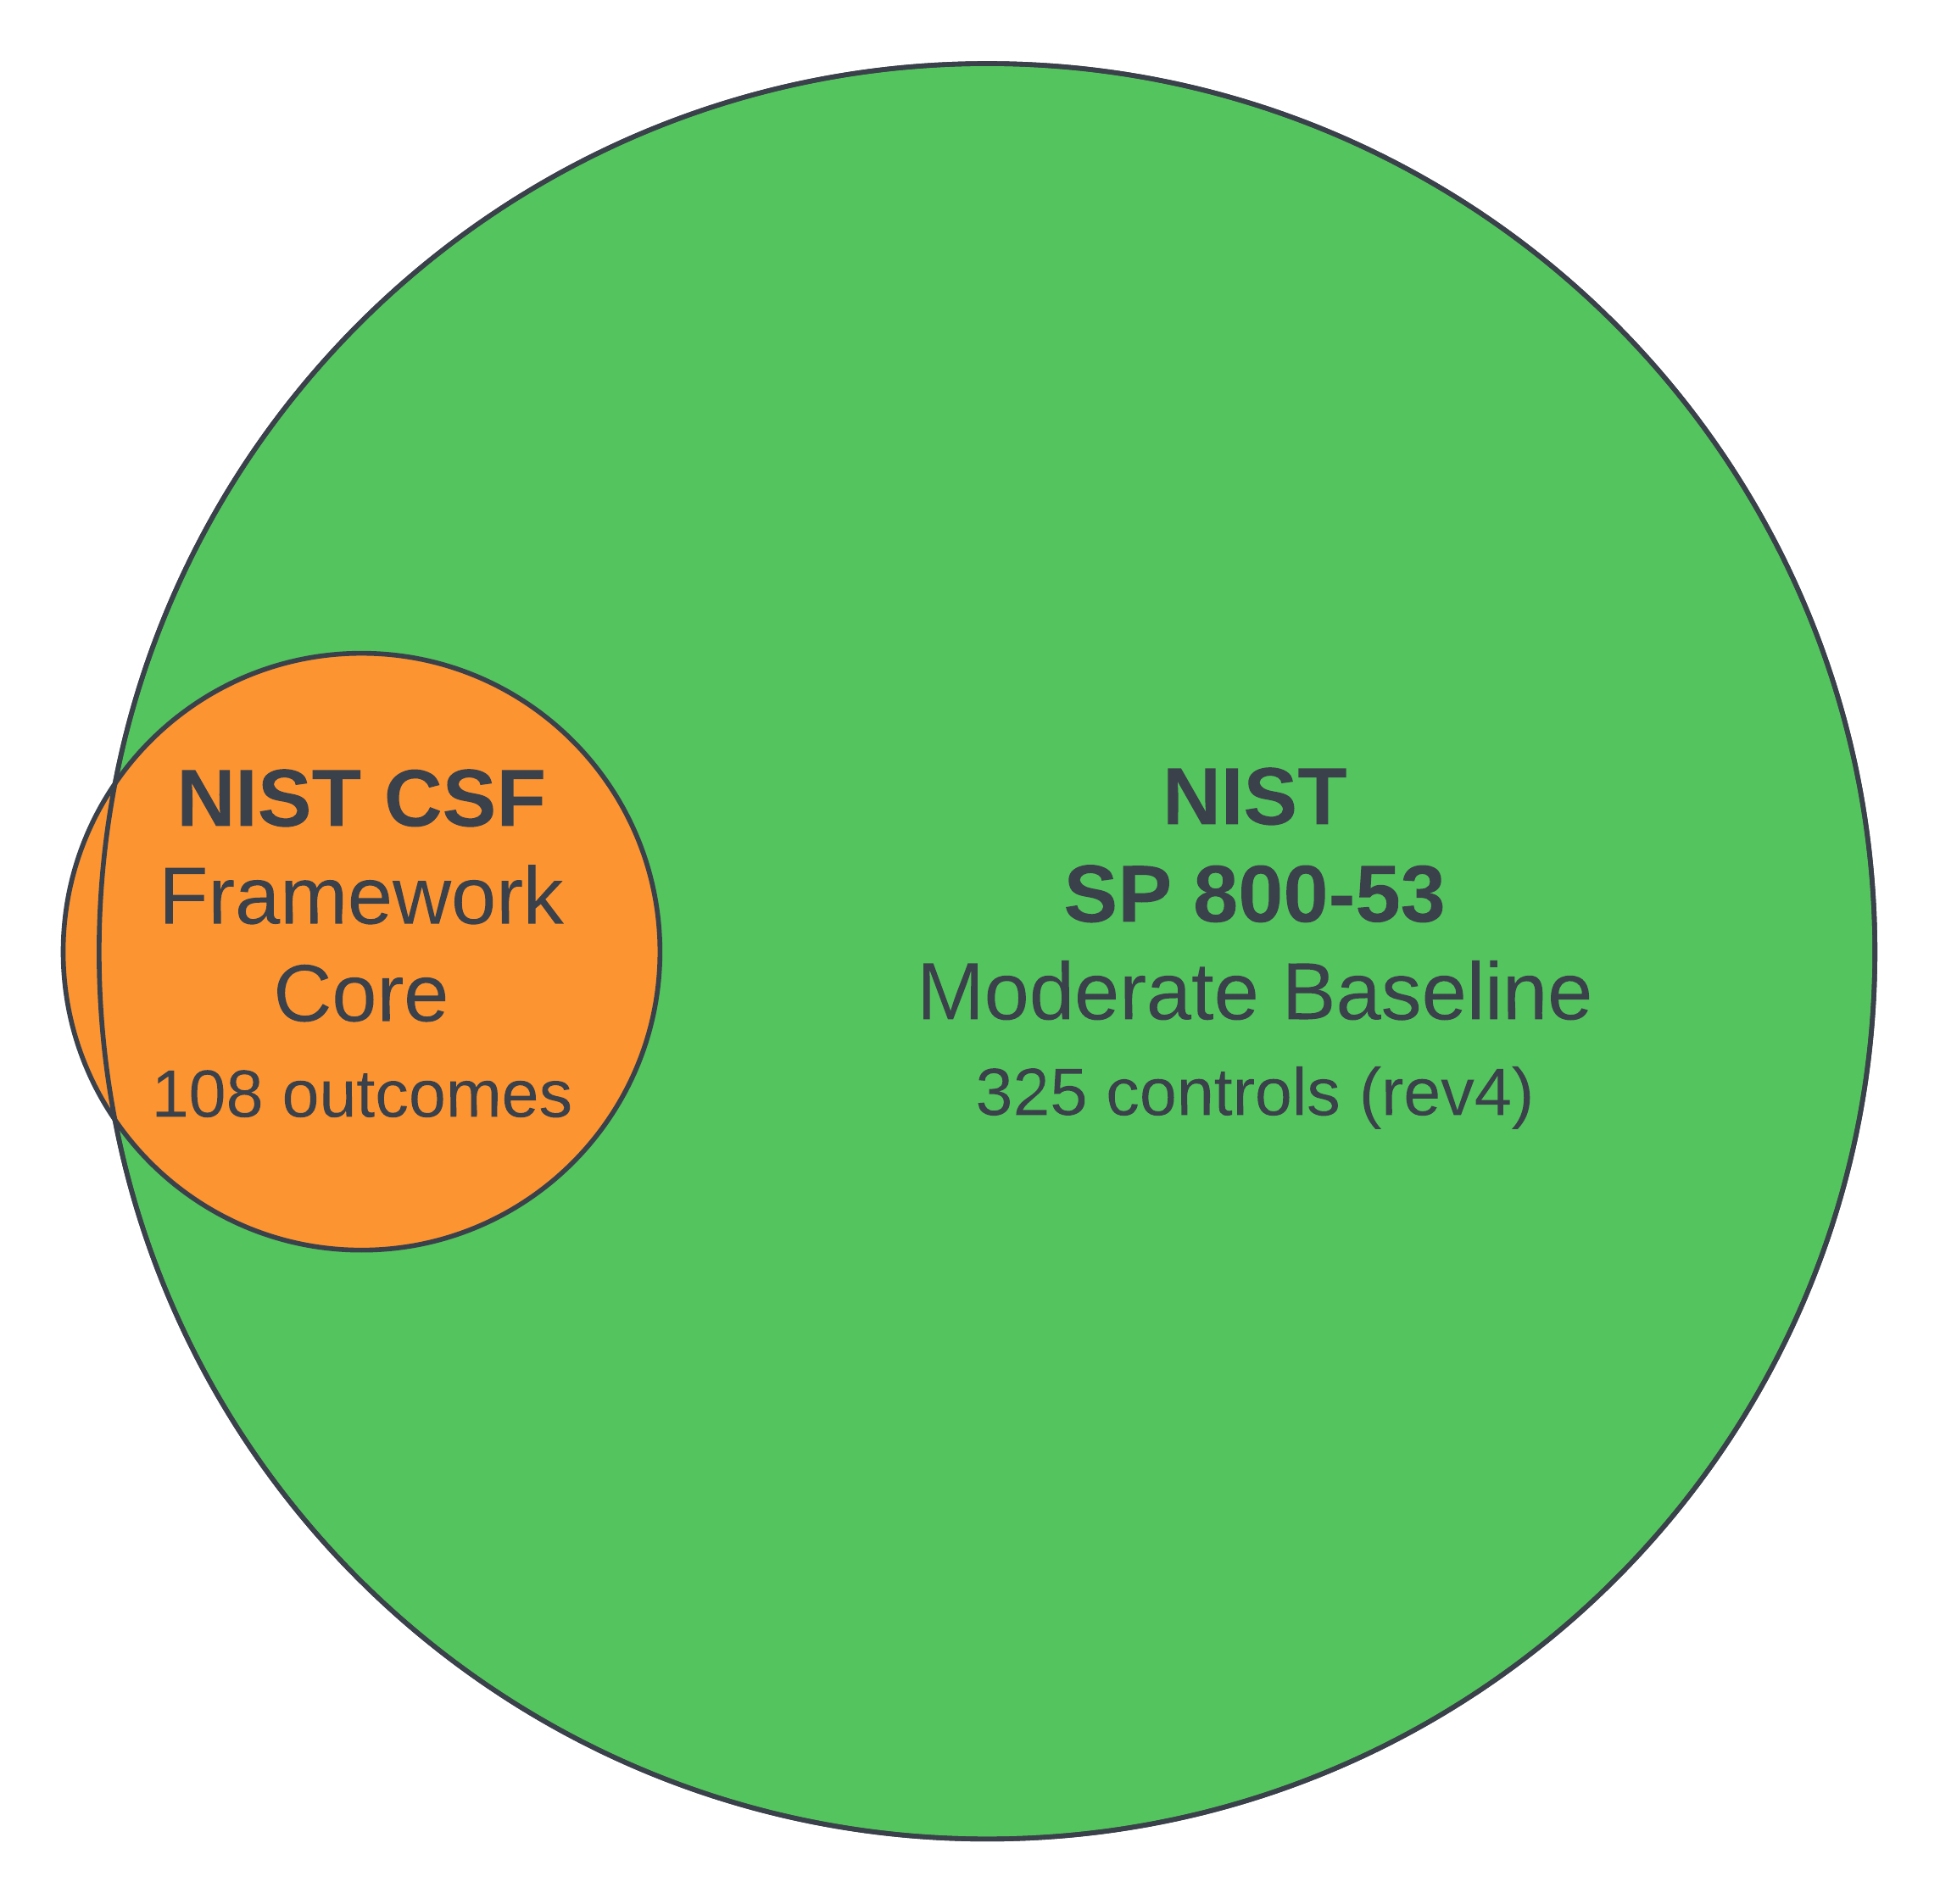 NIST CSF Outcomes vs NIST SP 800-53 Controls